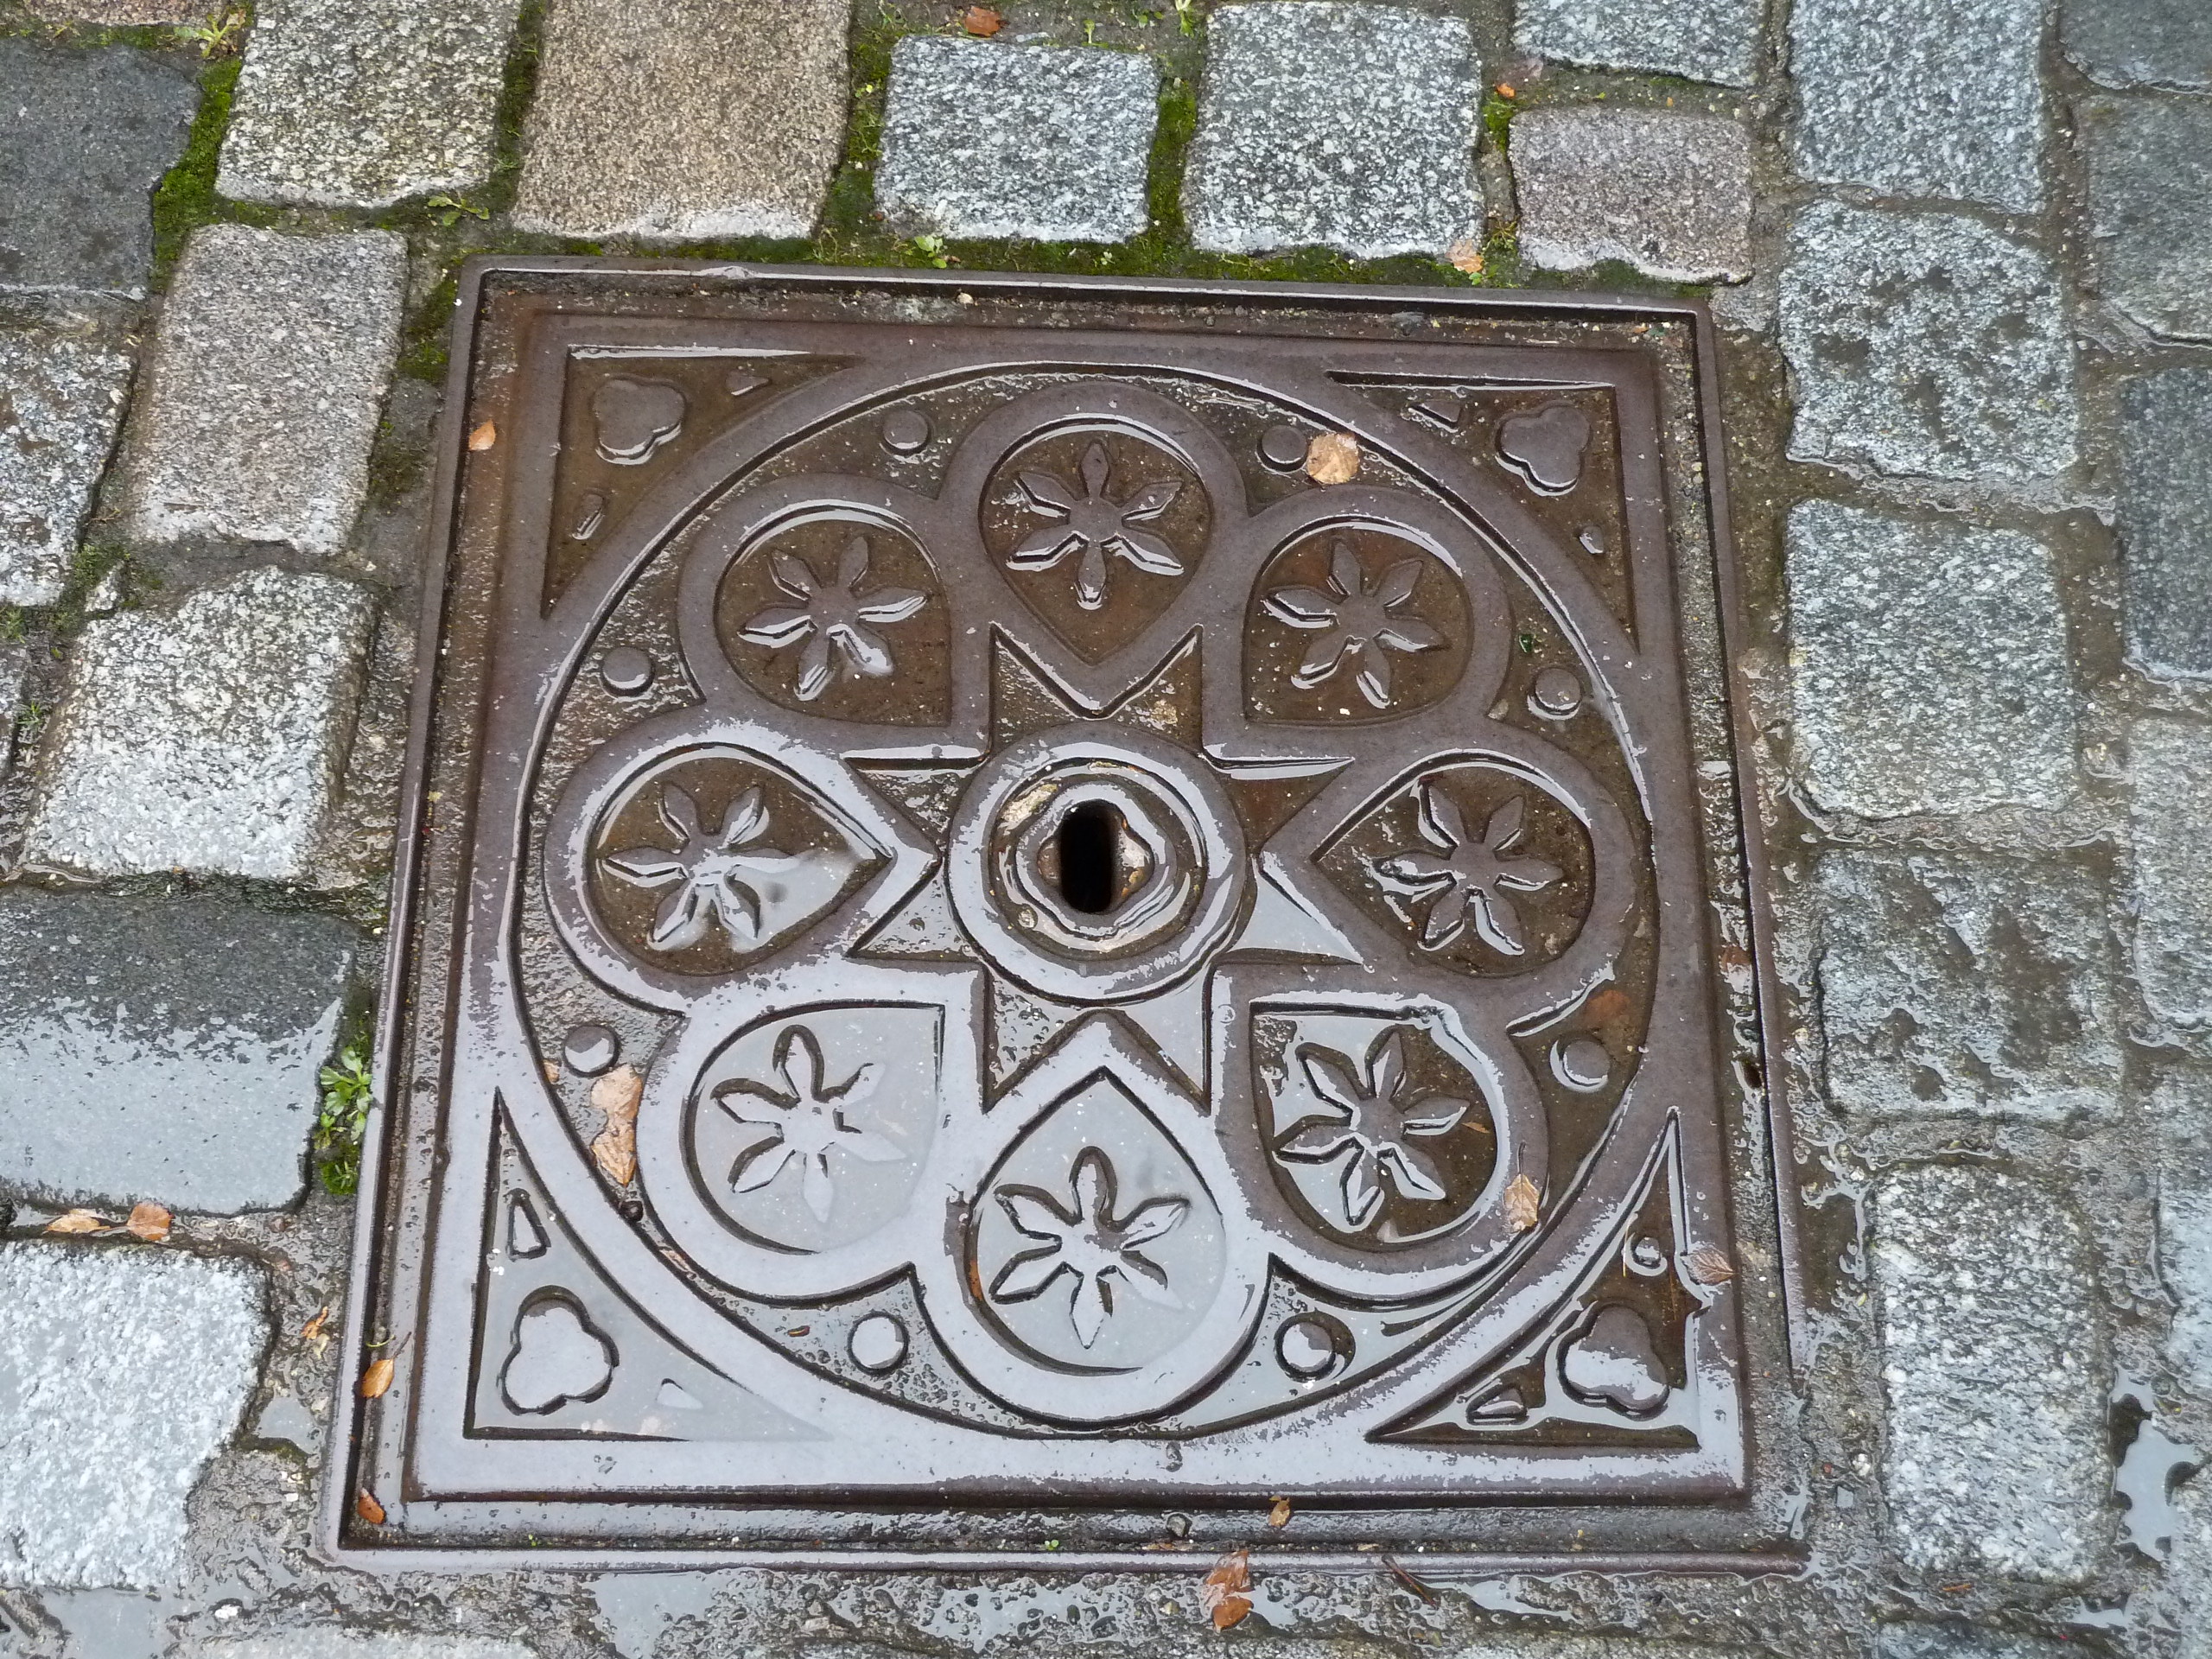 Bamburg Manhole Cover